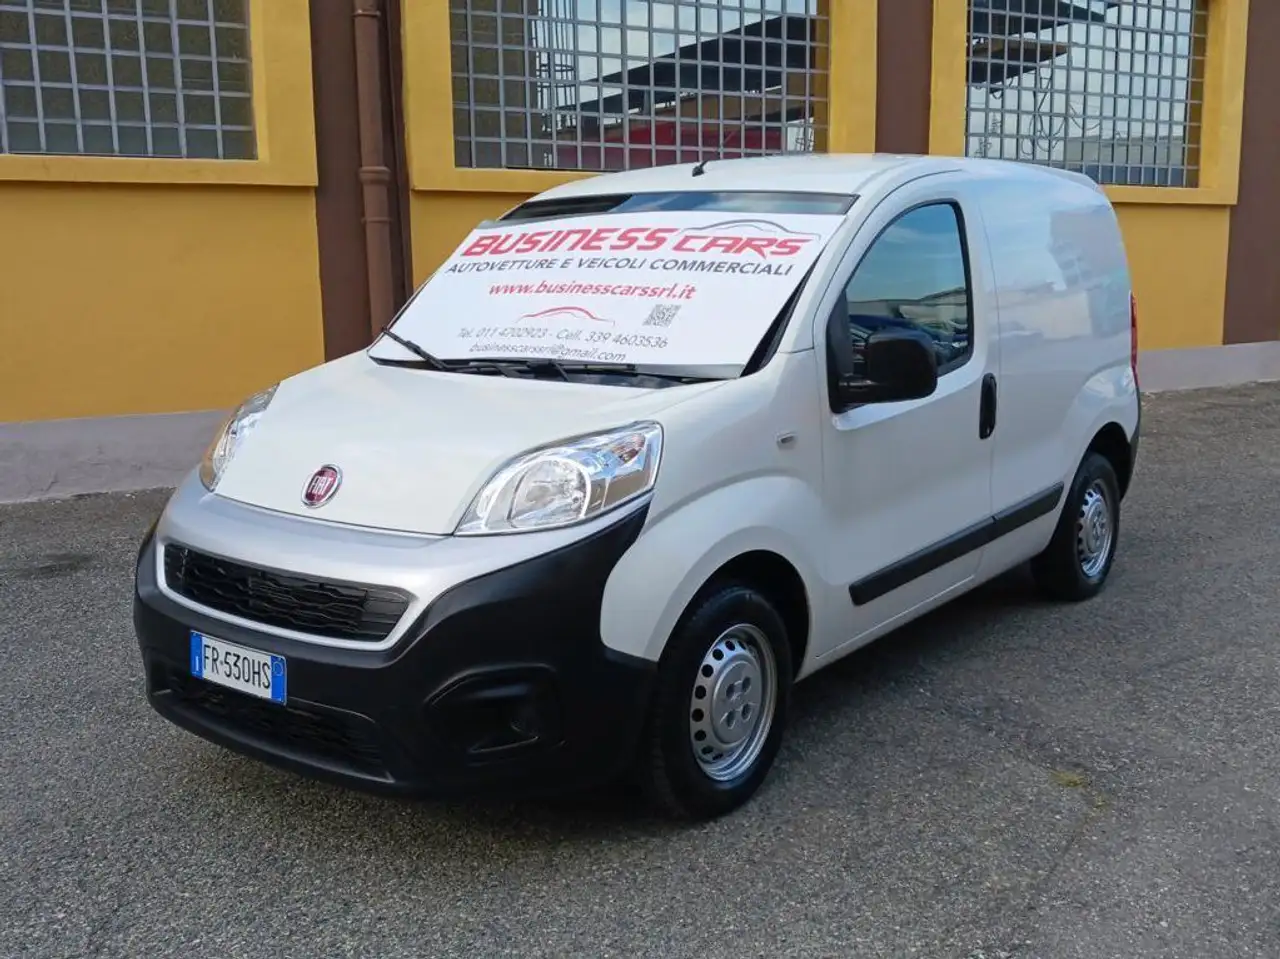 €9.500 Fiat Fiorino 1.4 benzina cargo - gancio traino - tagliandato Benzina  - 8443676